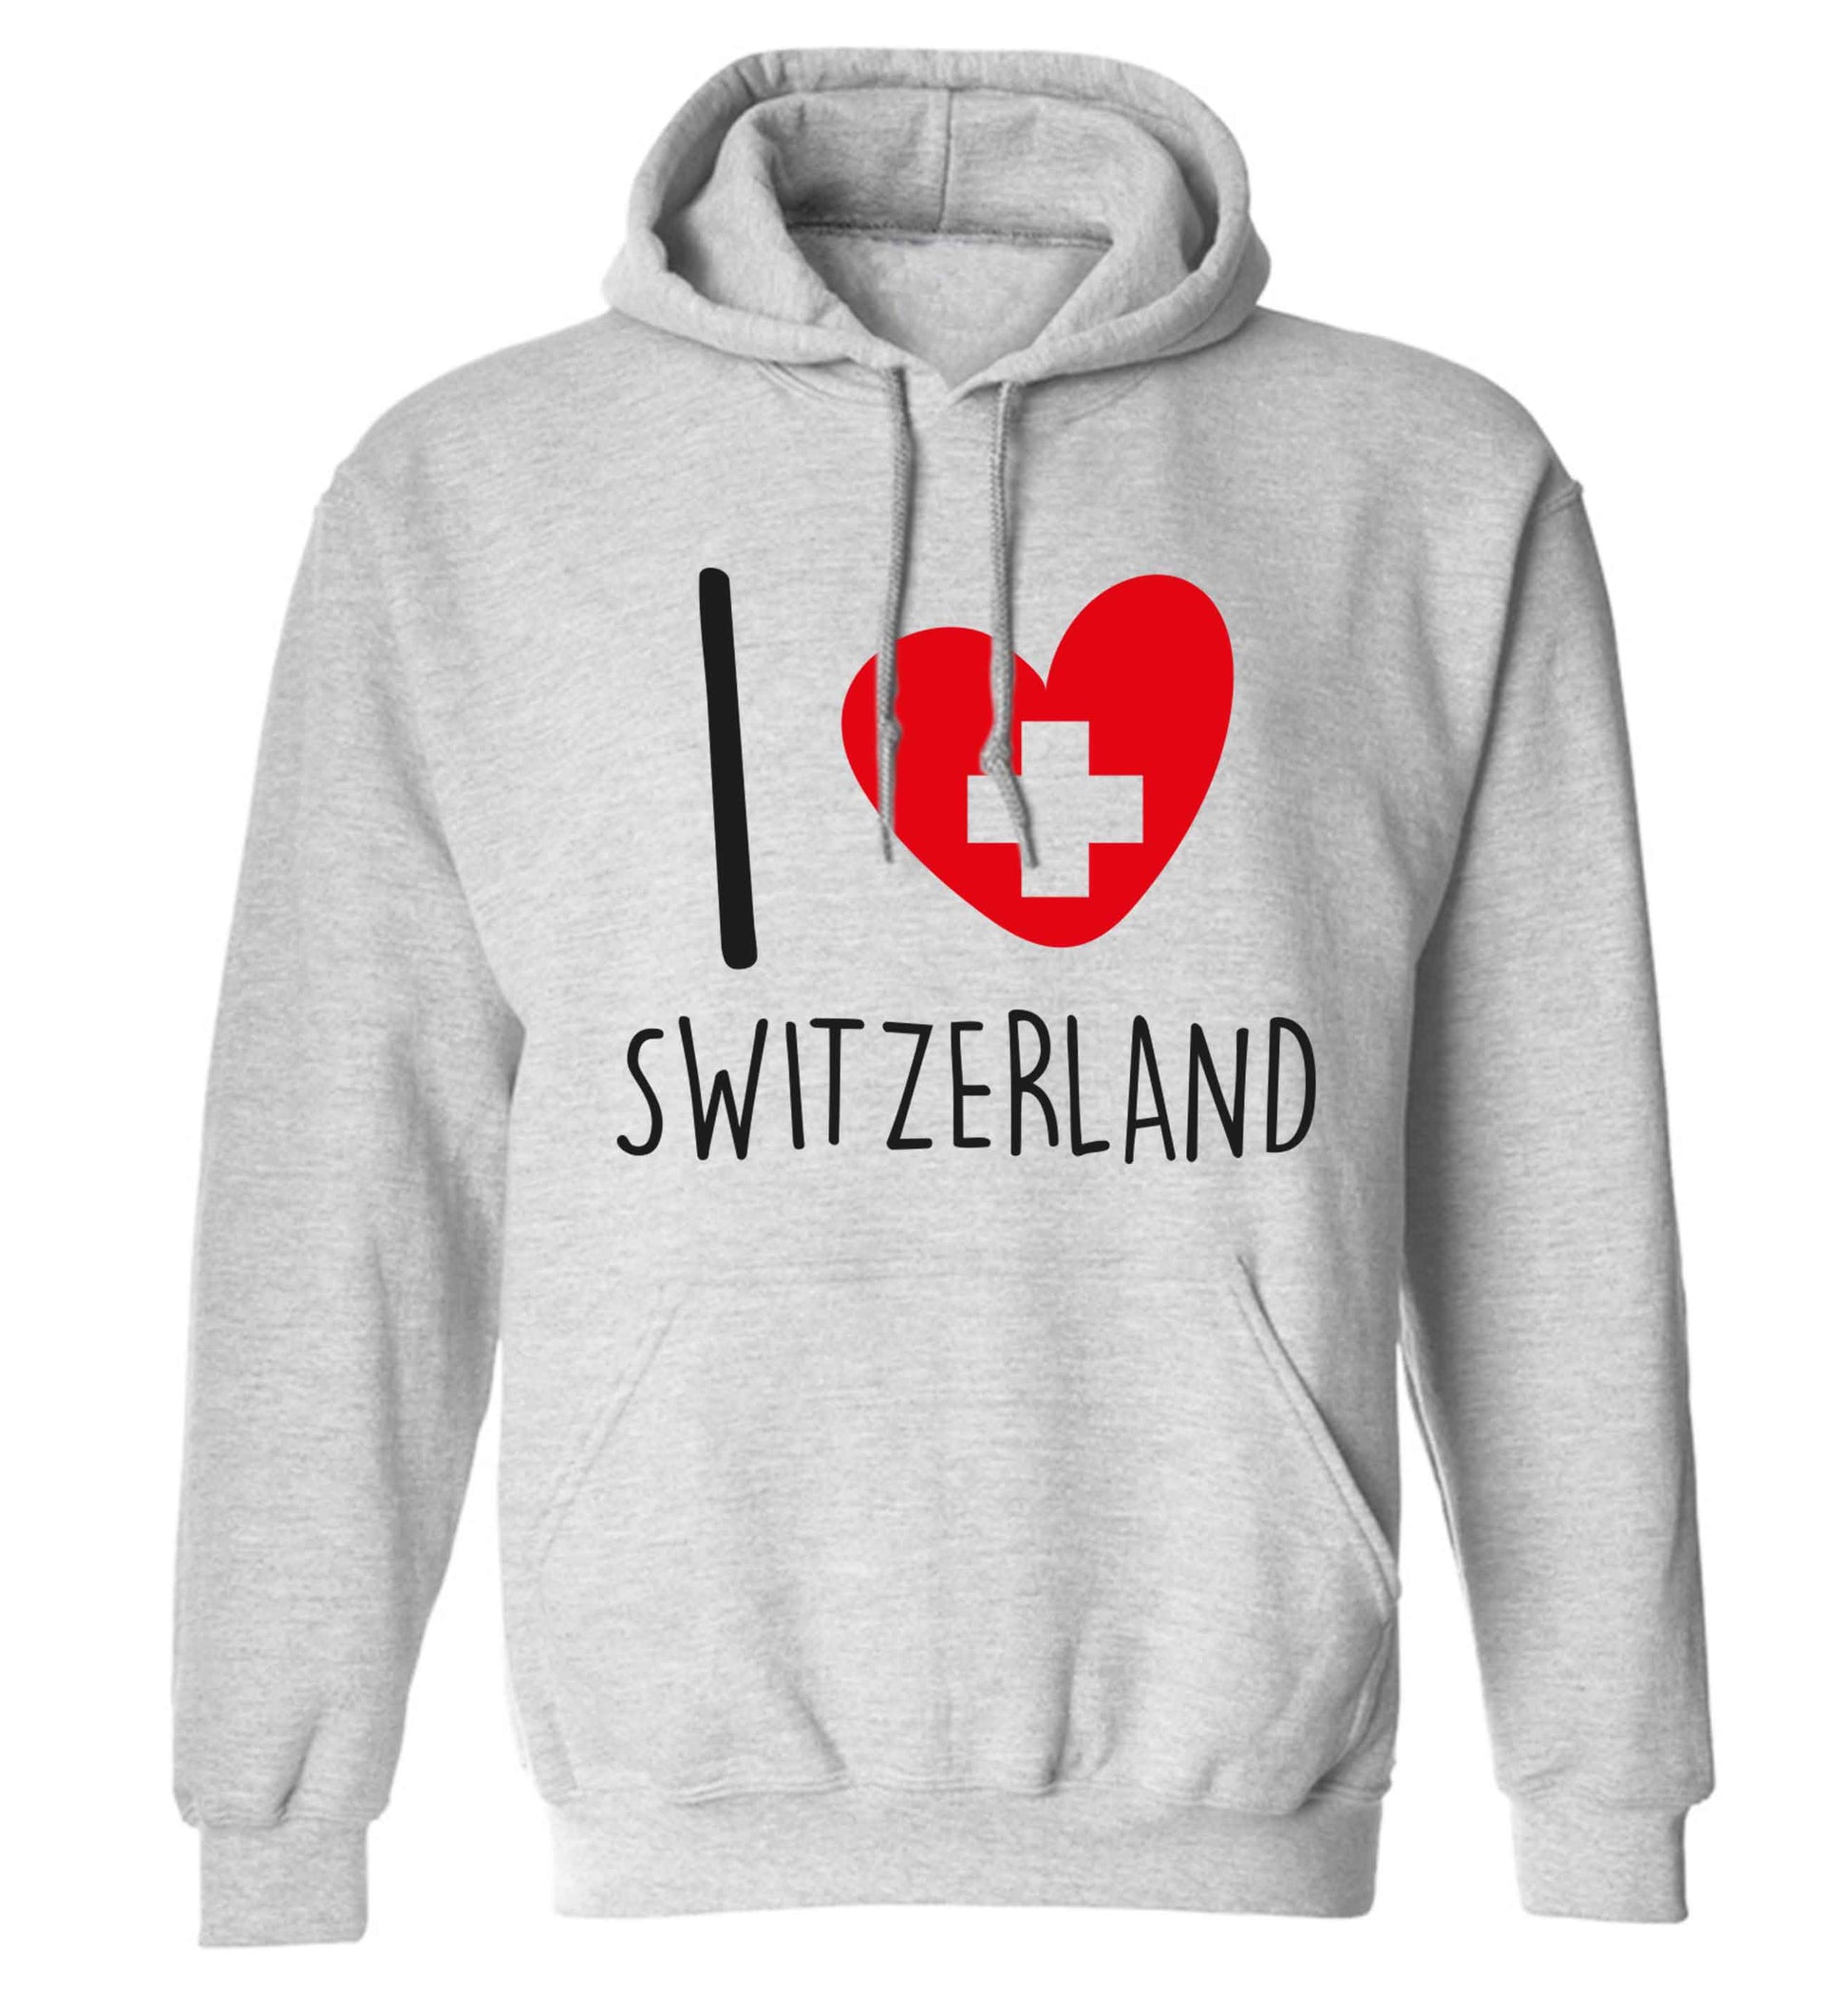 I love switzerland adults unisex grey hoodie 2XL